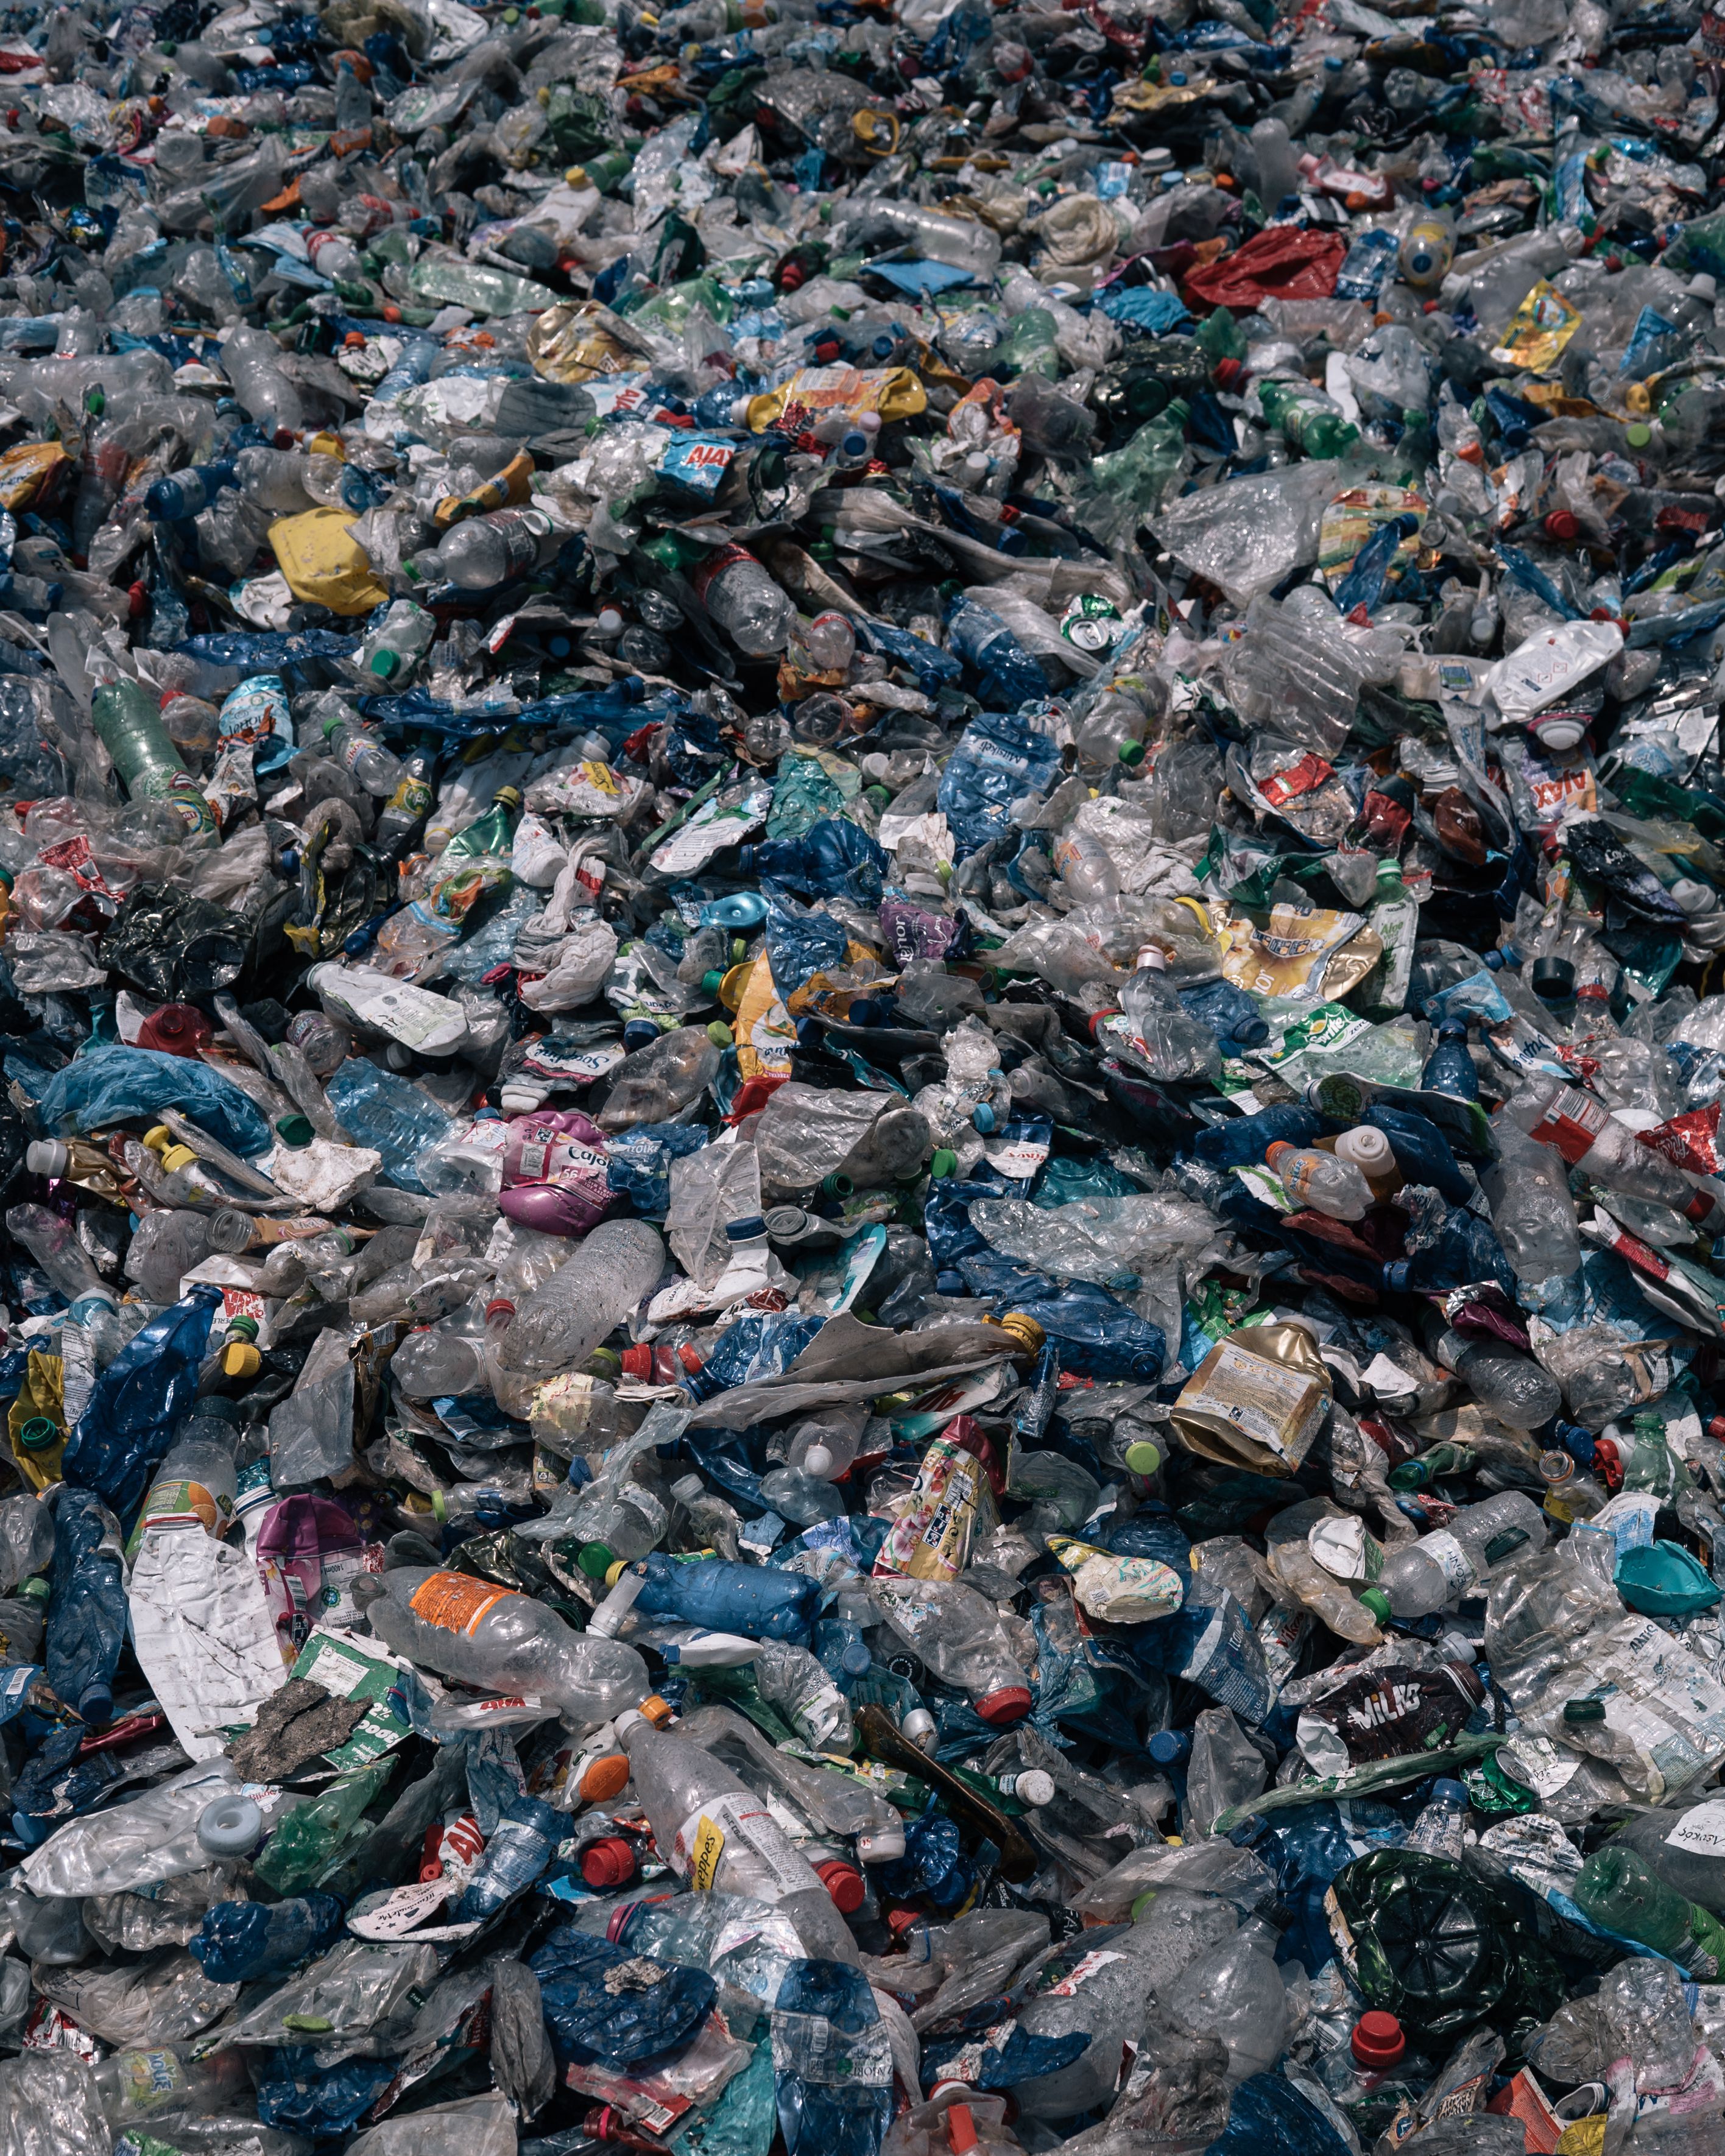 Plastic pollution in Mediterranean is cleaned by Enaleia, Lefteris Arapakis